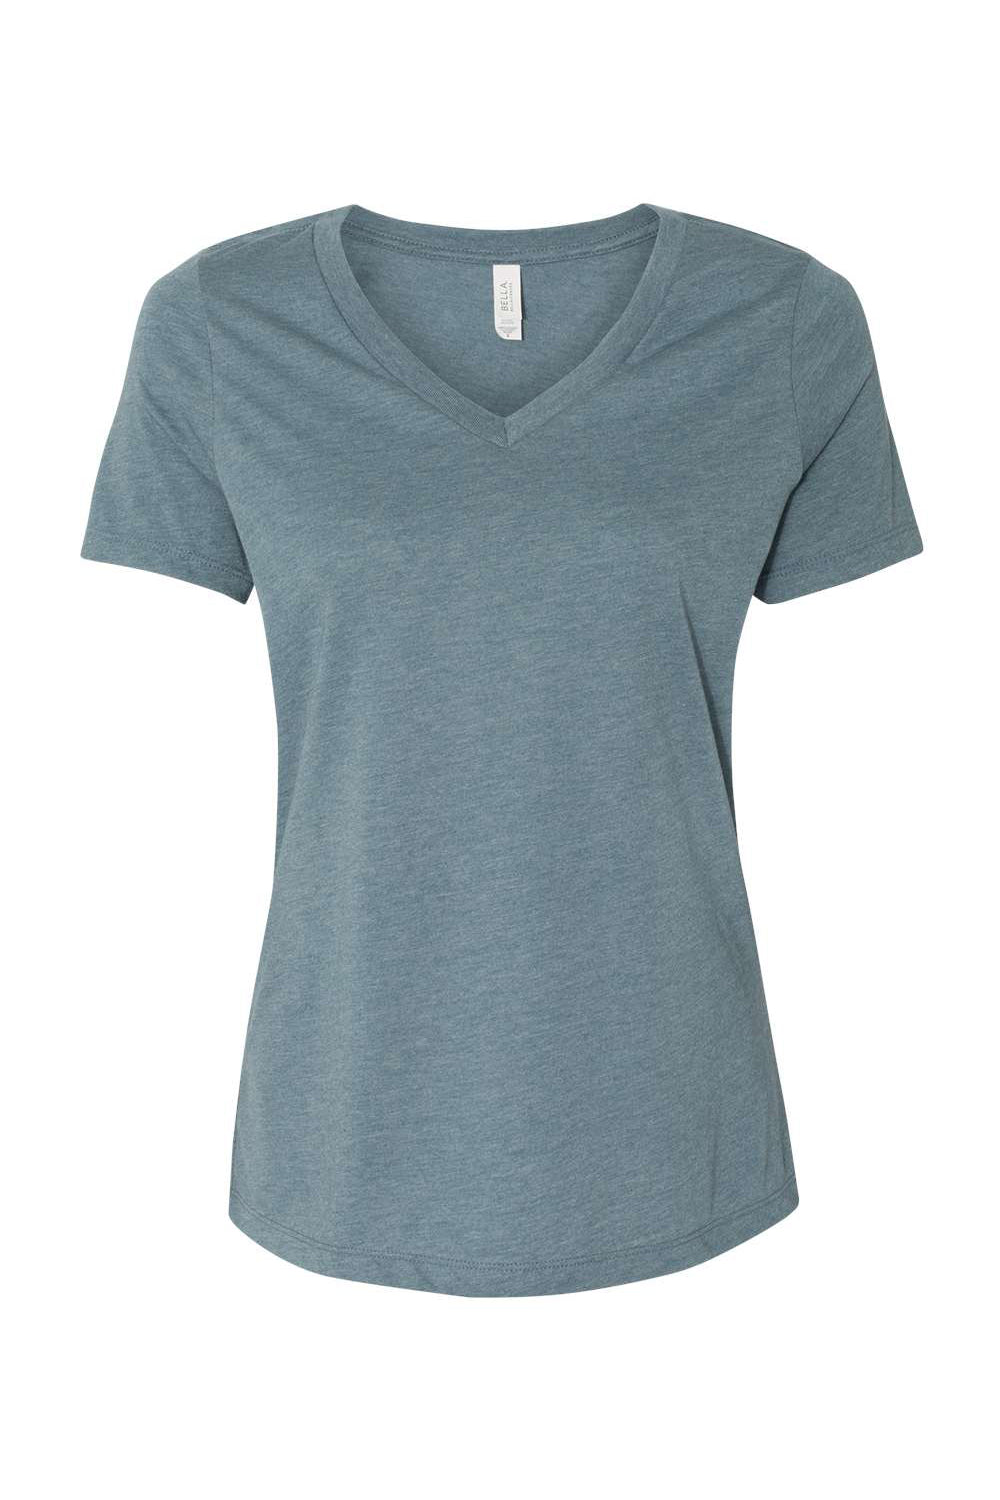 Bella + Canvas BC6405CVC Womens Relaxed Jersey Short Sleeve V-Neck T-Shirt Heather Slate Blue Flat Front